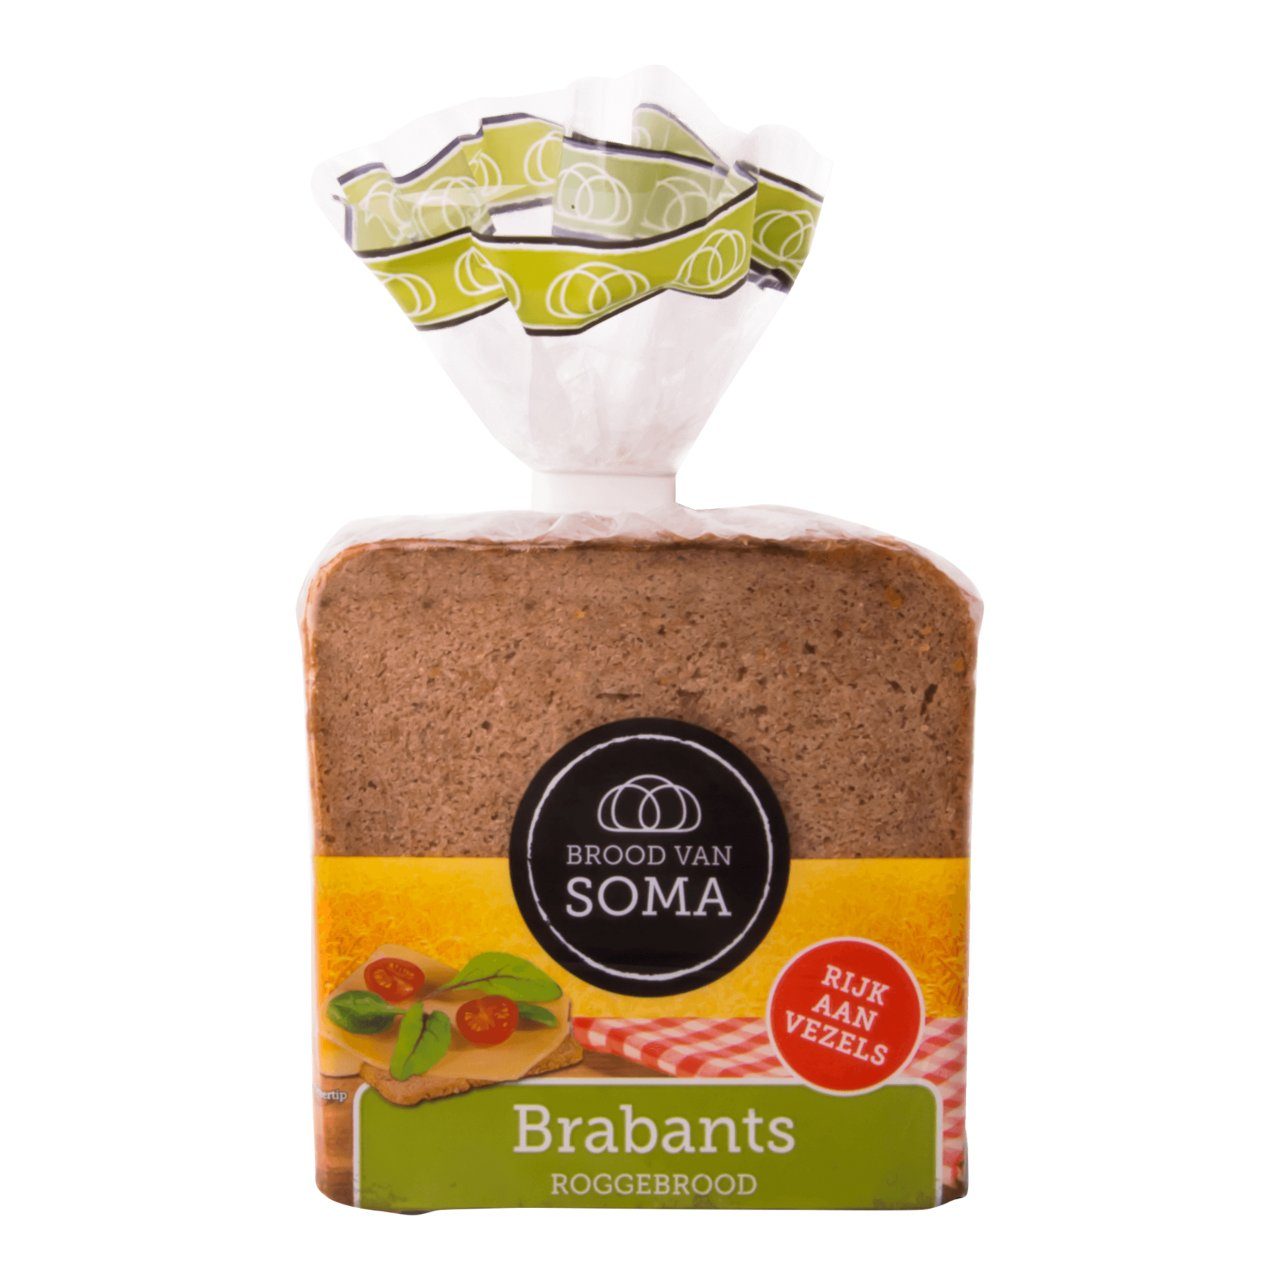 Brabants roggebrood